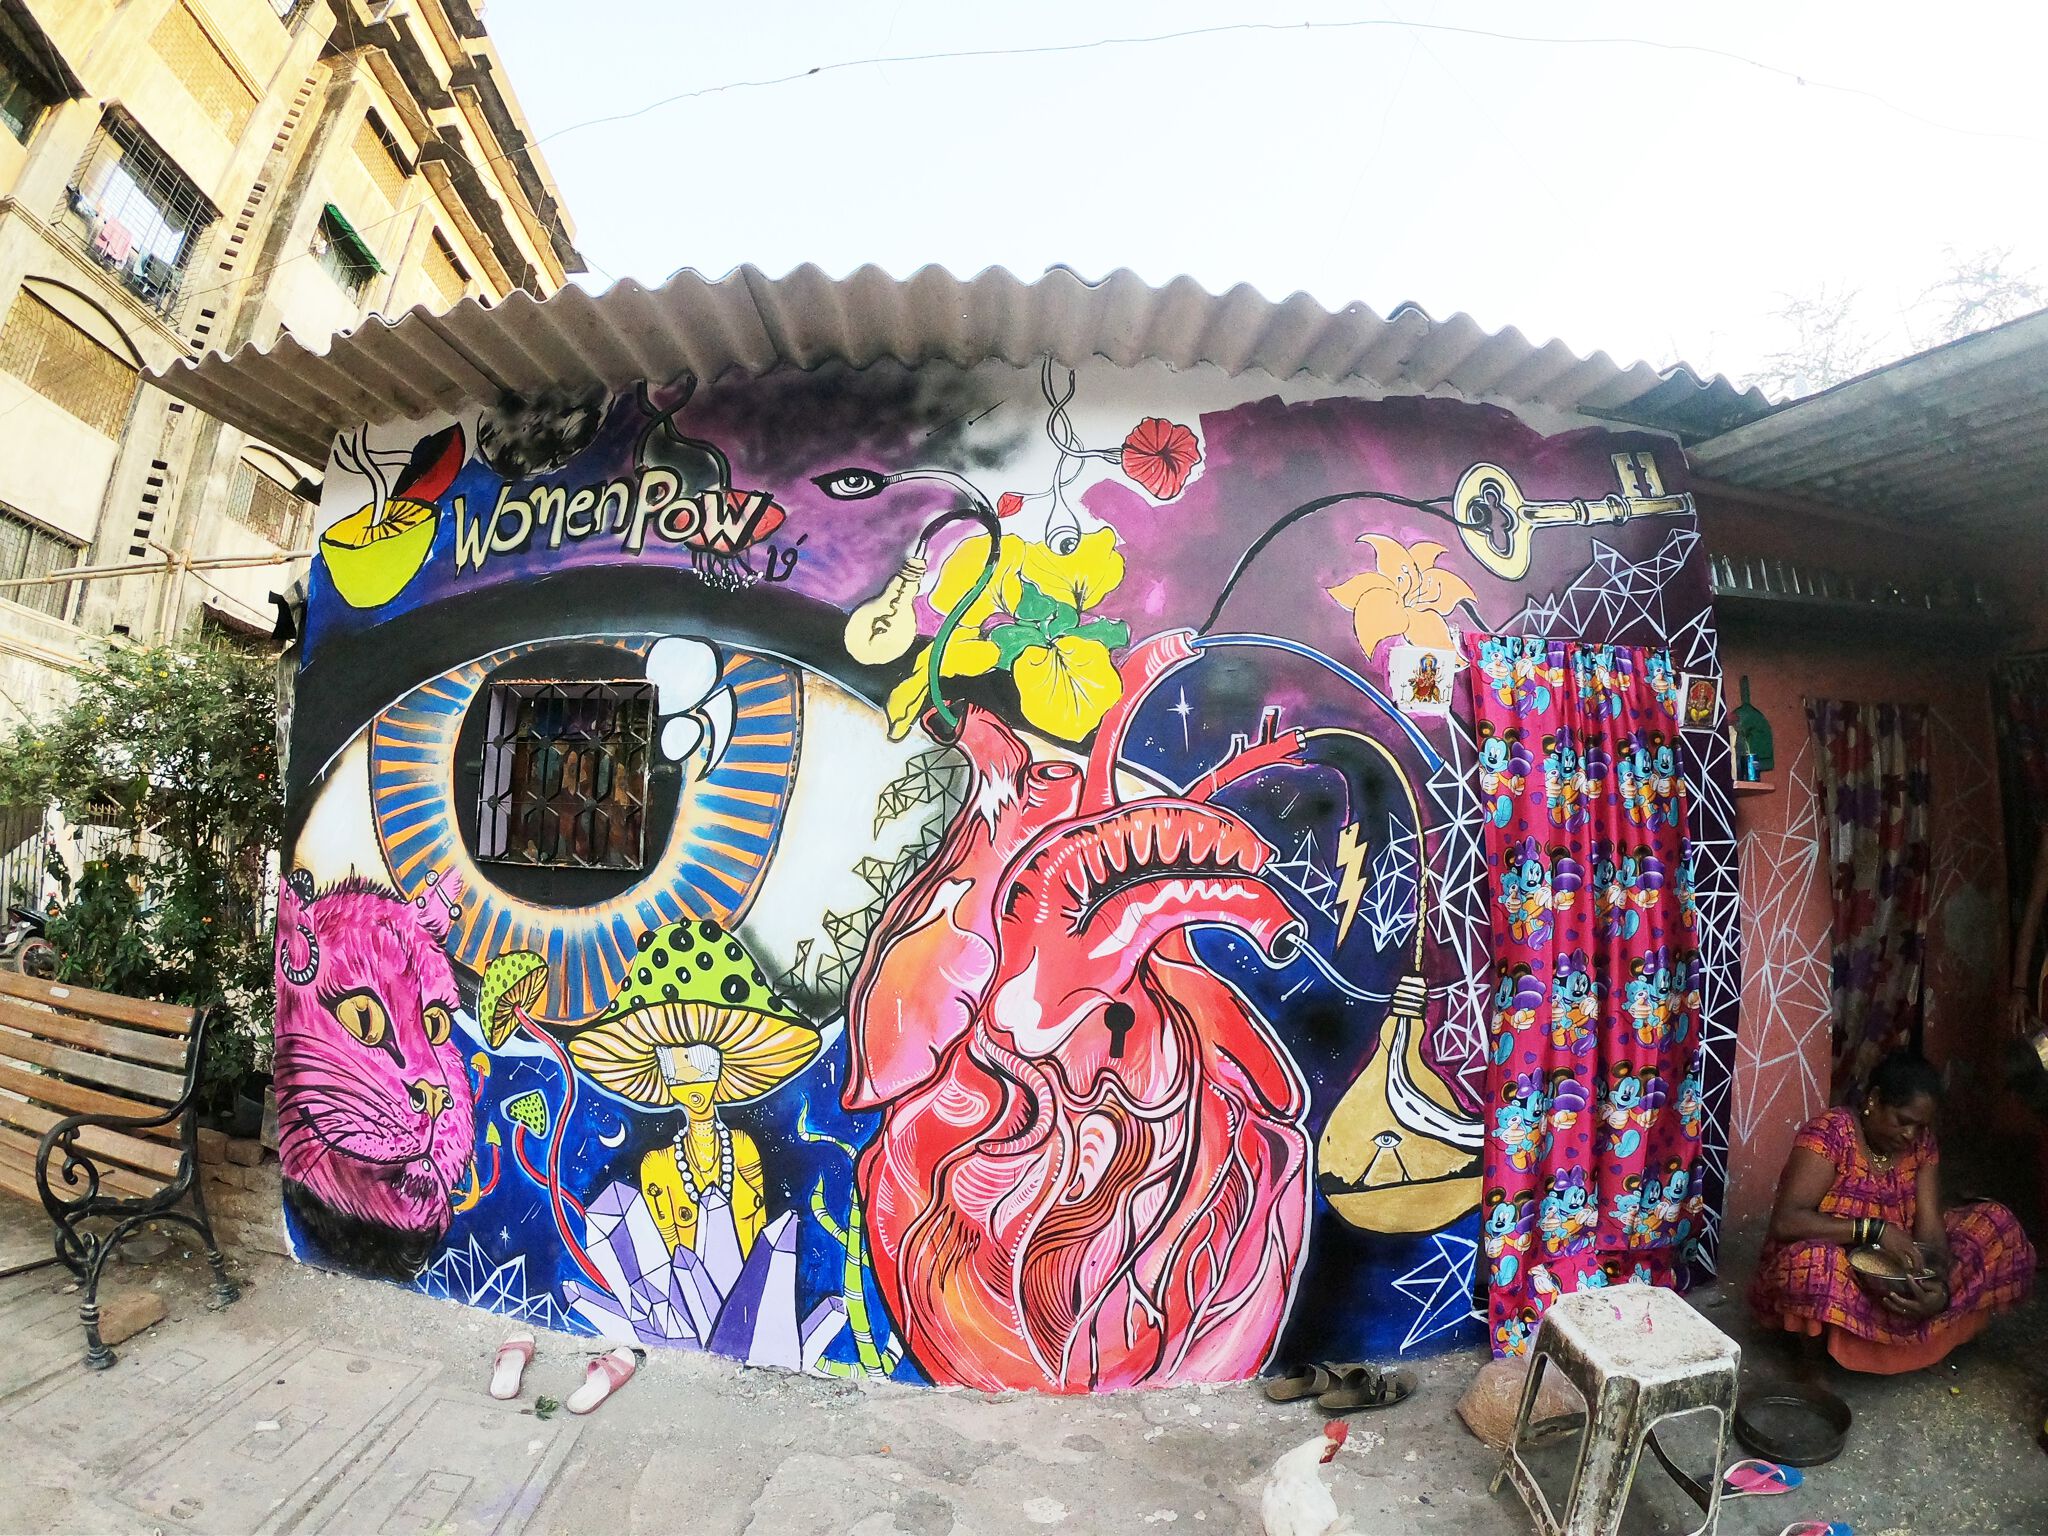 Womenpow&mdash;Ladies First Street Art by Avantika Mathur at Kattu